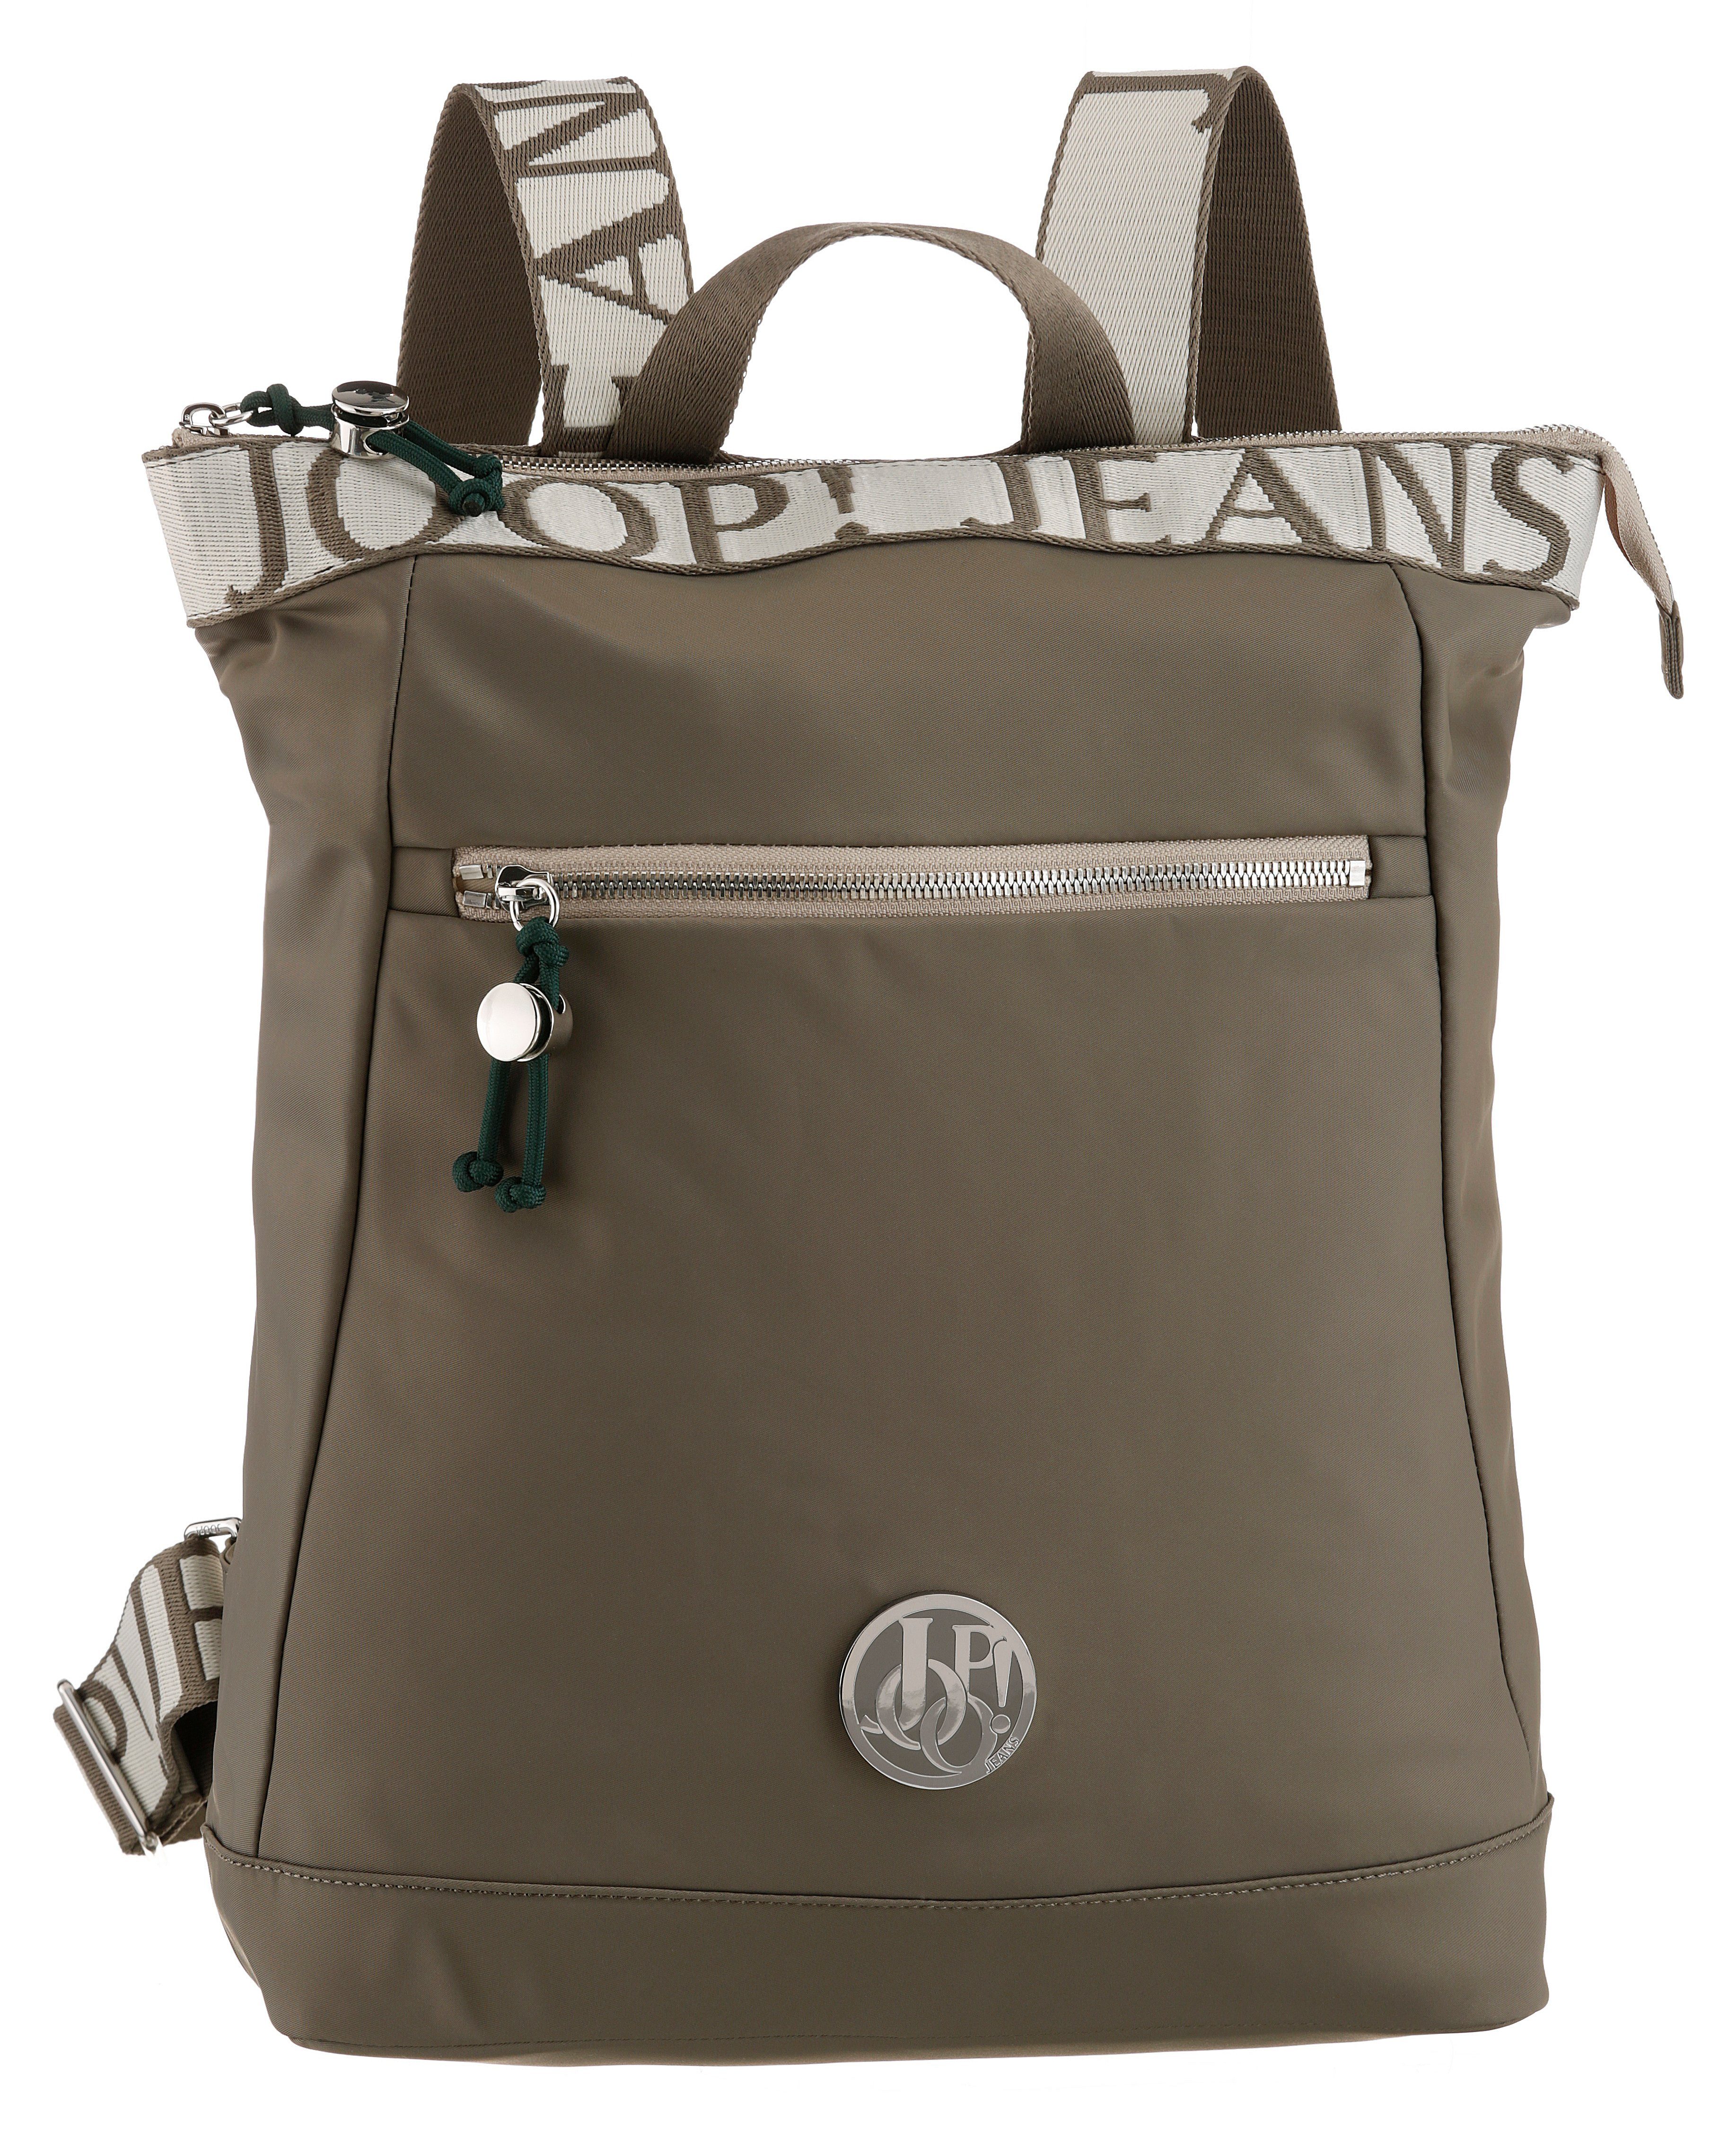 Joop Jeans Cityrucksack lietissimo elva backpack lvz, mit Logo Schriftzug auf den Trageriemen grey | 